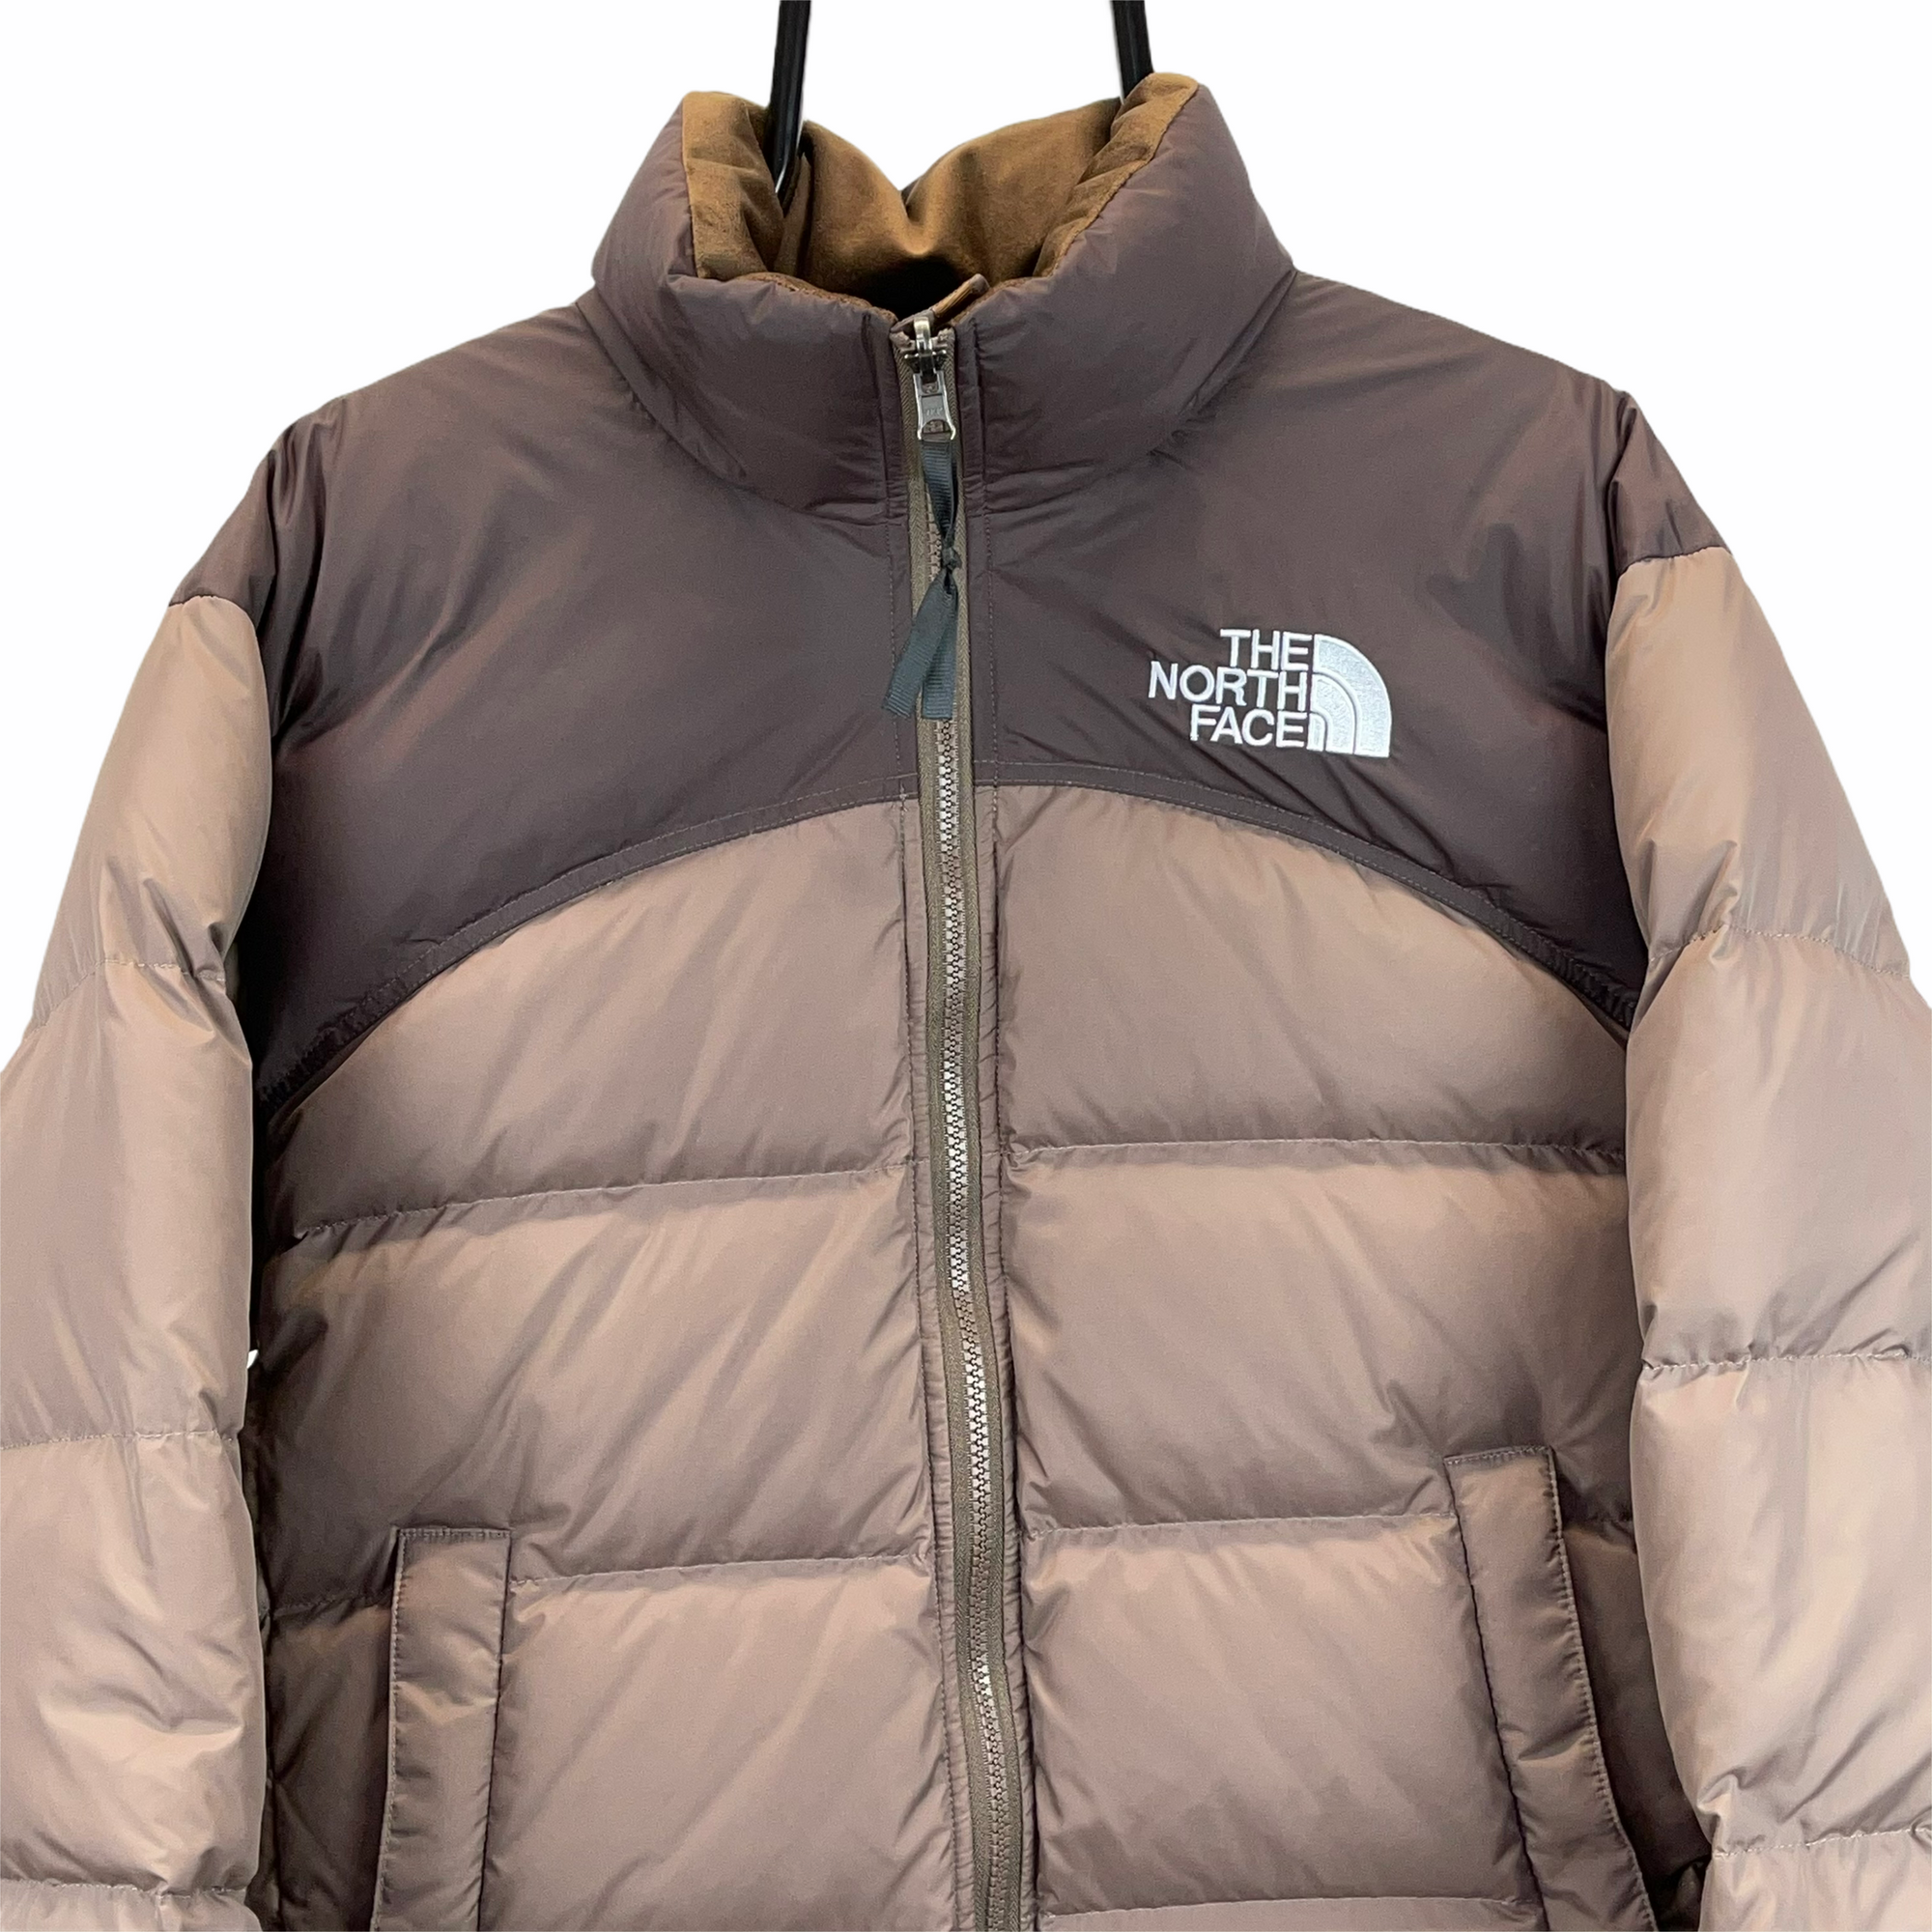 North Face Nuptse 700 Puffer Jacket in Brown - Men's Small/Women's Medium